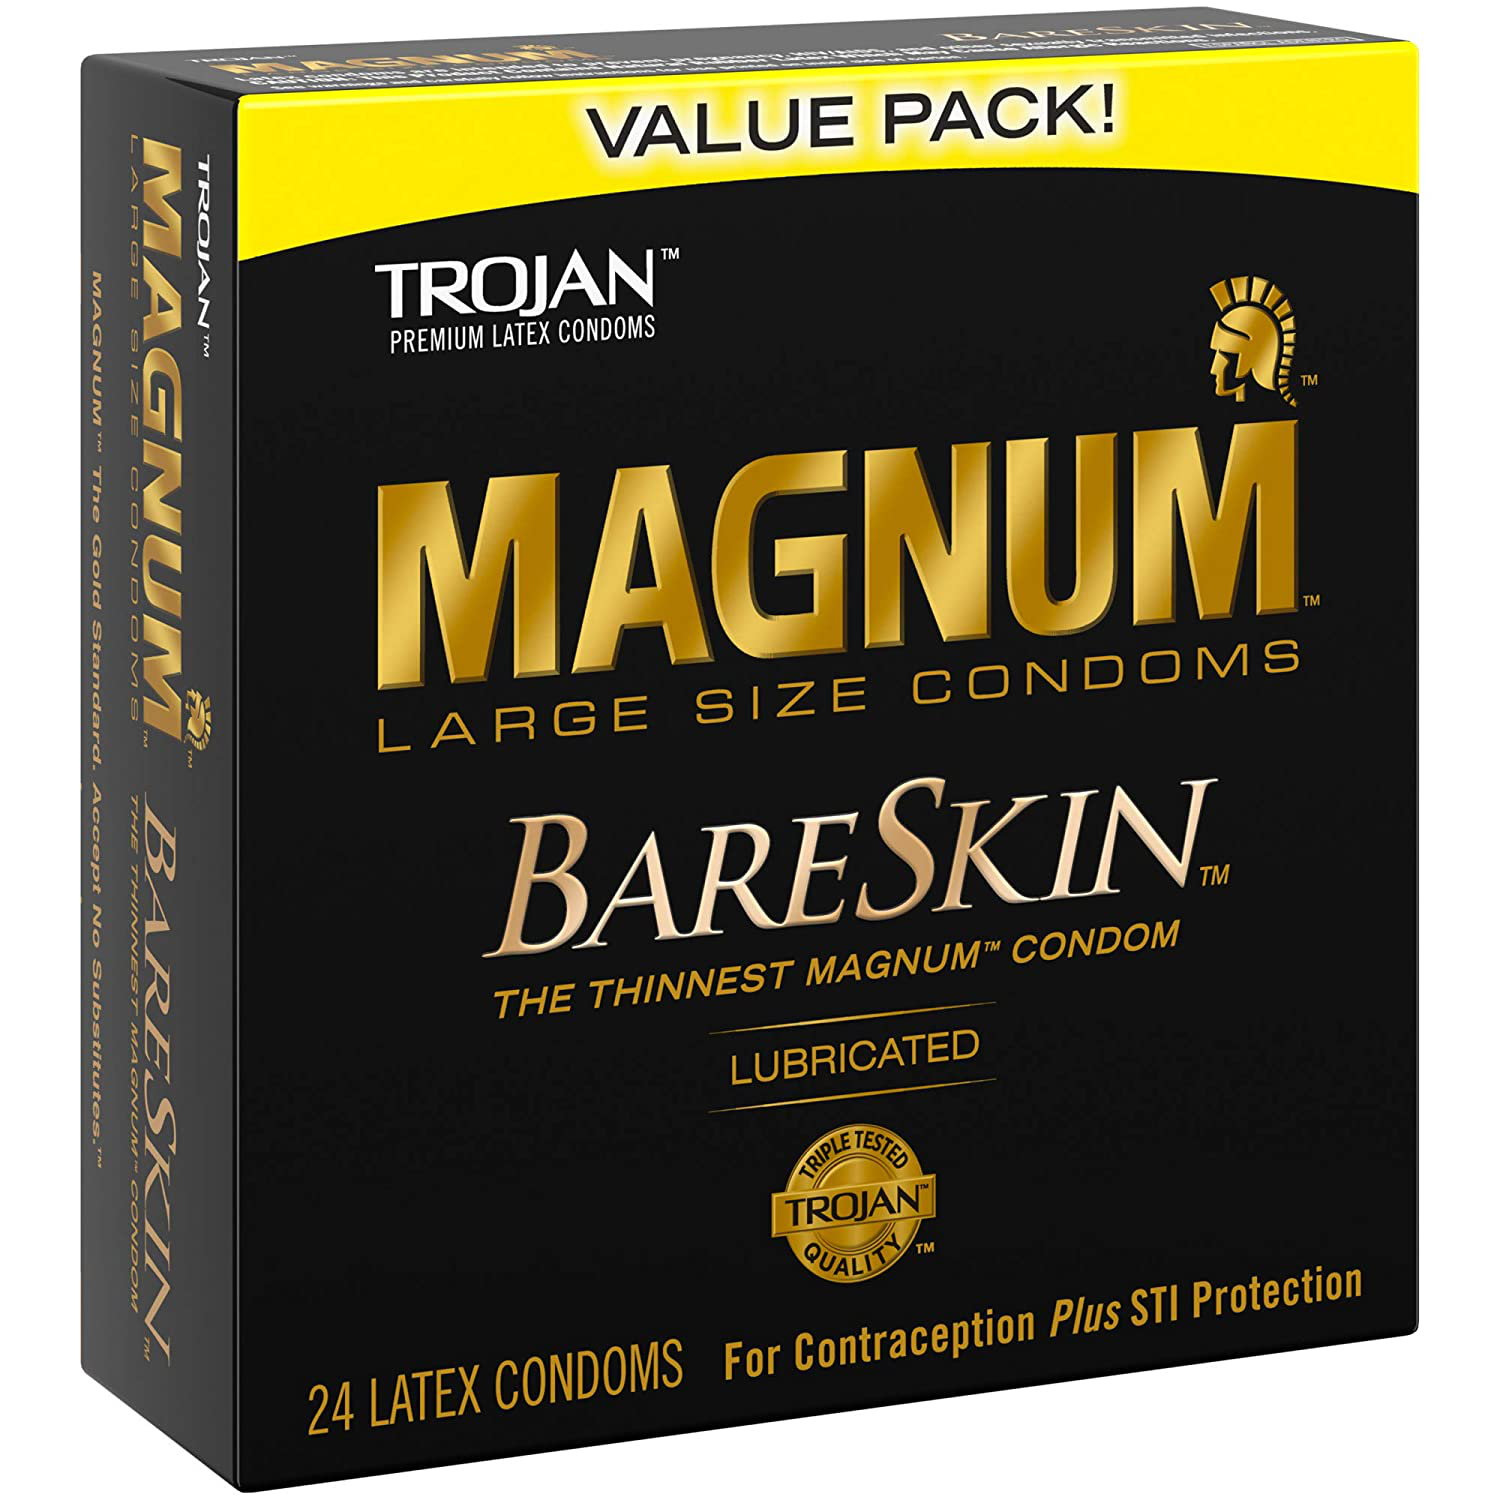 TROJAN MAGNUM BARESKIN Large Size Condoms, 24 Count